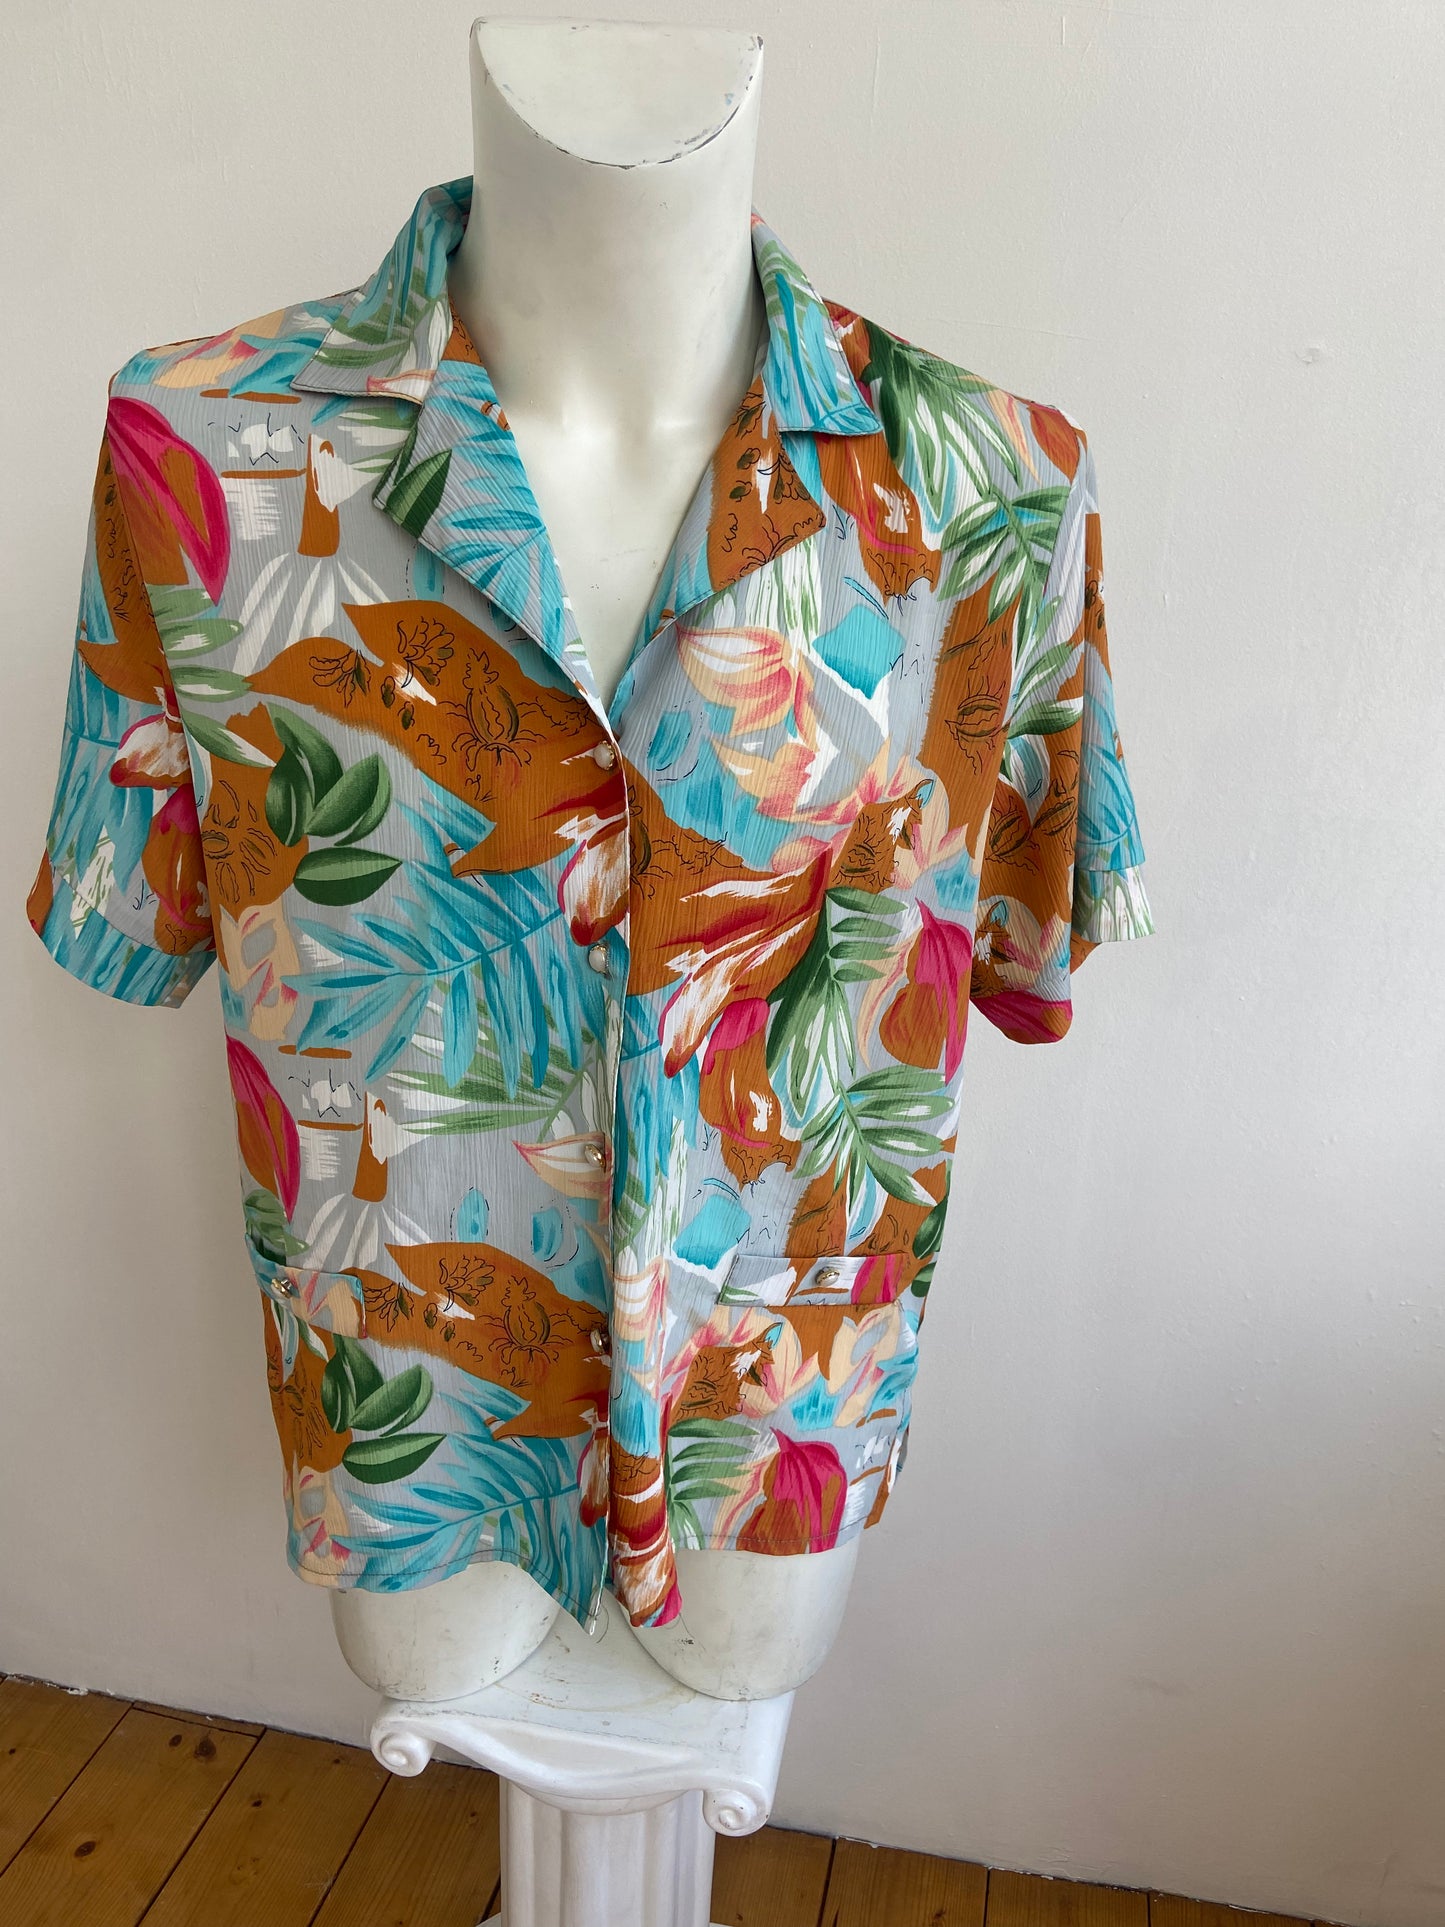 Too tropical shirt